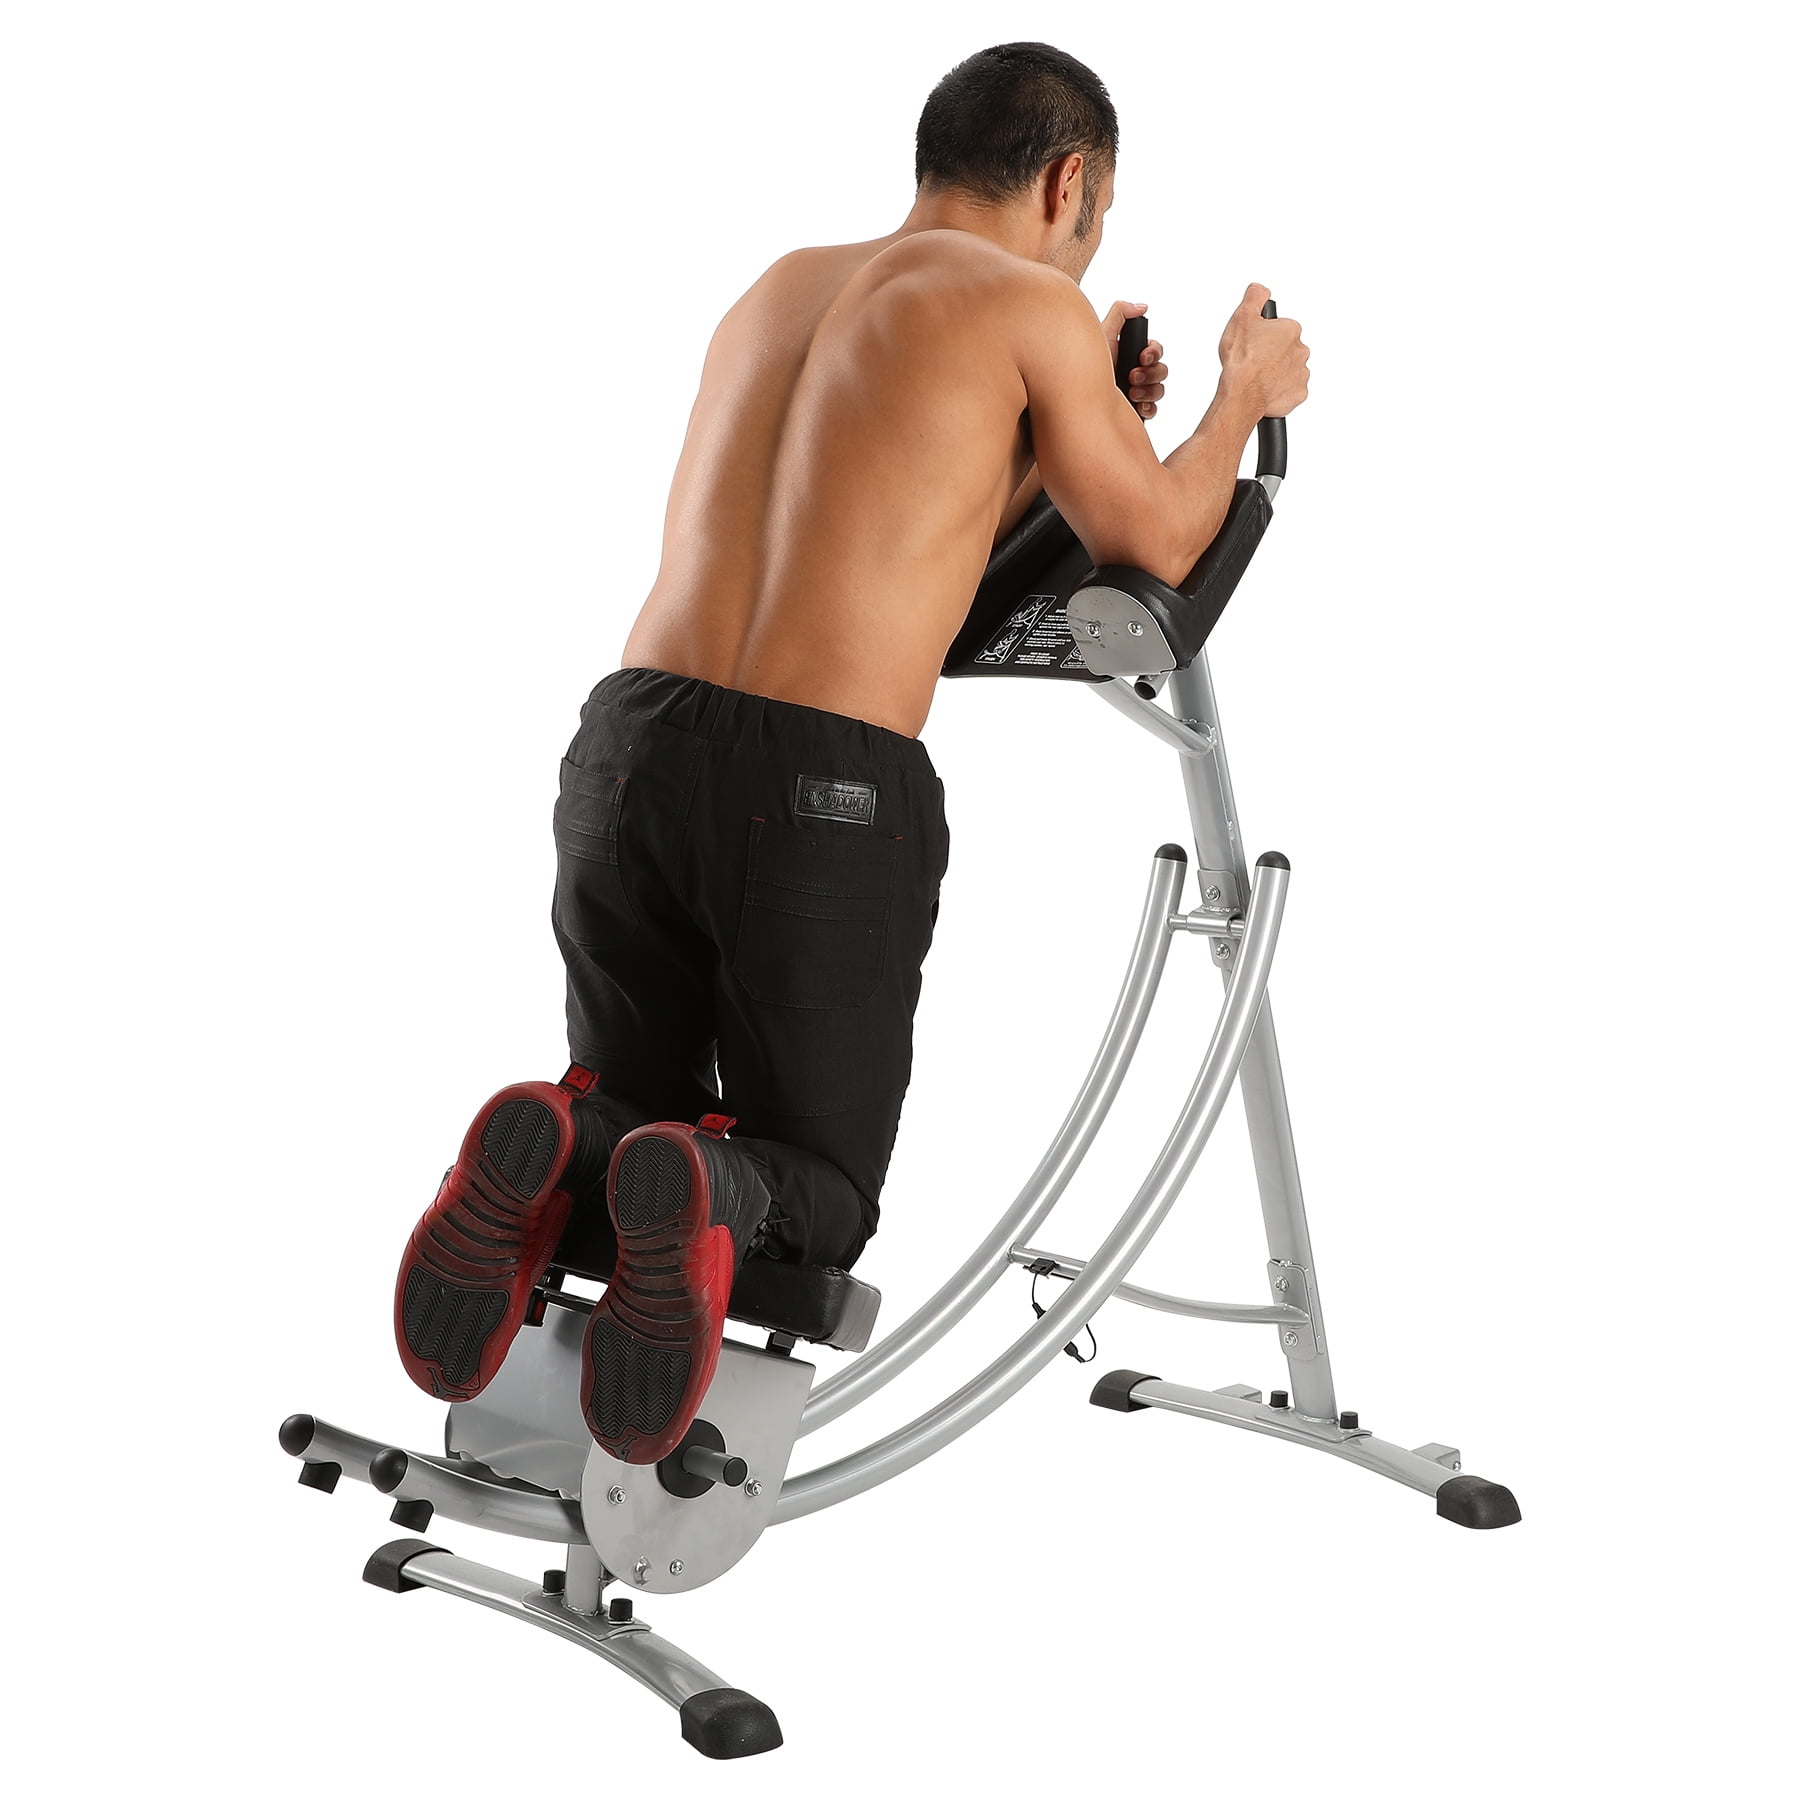 Ab Trainer Abdomen Abdominal Machine Fitness Equipment With Bottom-Up Design For 